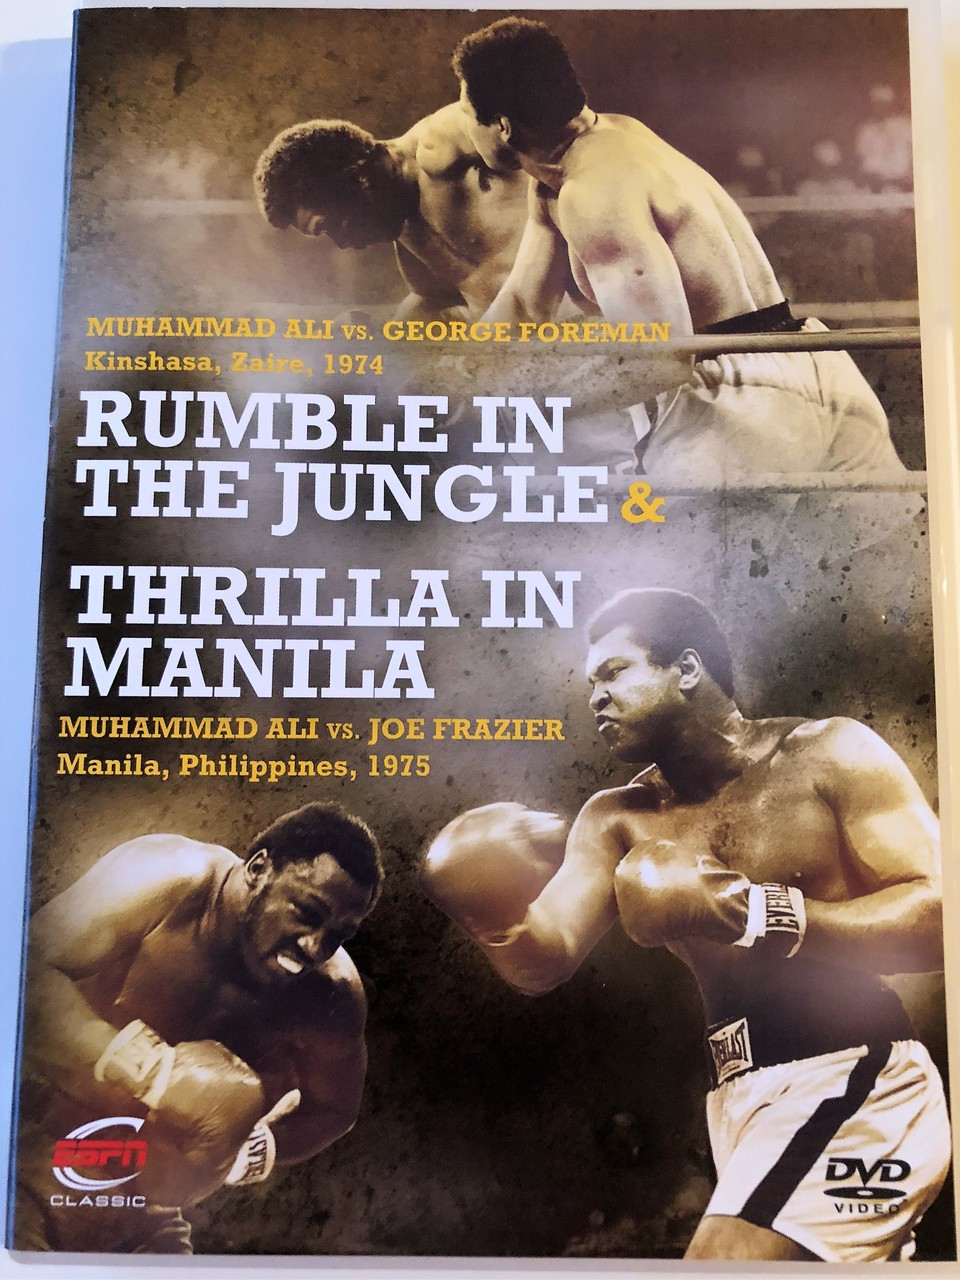 BOXING - Rumble in the Jungle & Thrilla in Manilla DVD / George Foreman vs.  Muhammad Ali in Kinshasa, Zaire, 1974 / Muhammad Ali vs. Joe Frazier in  Manila, Philippines, 1975 - bibleinmylanguage